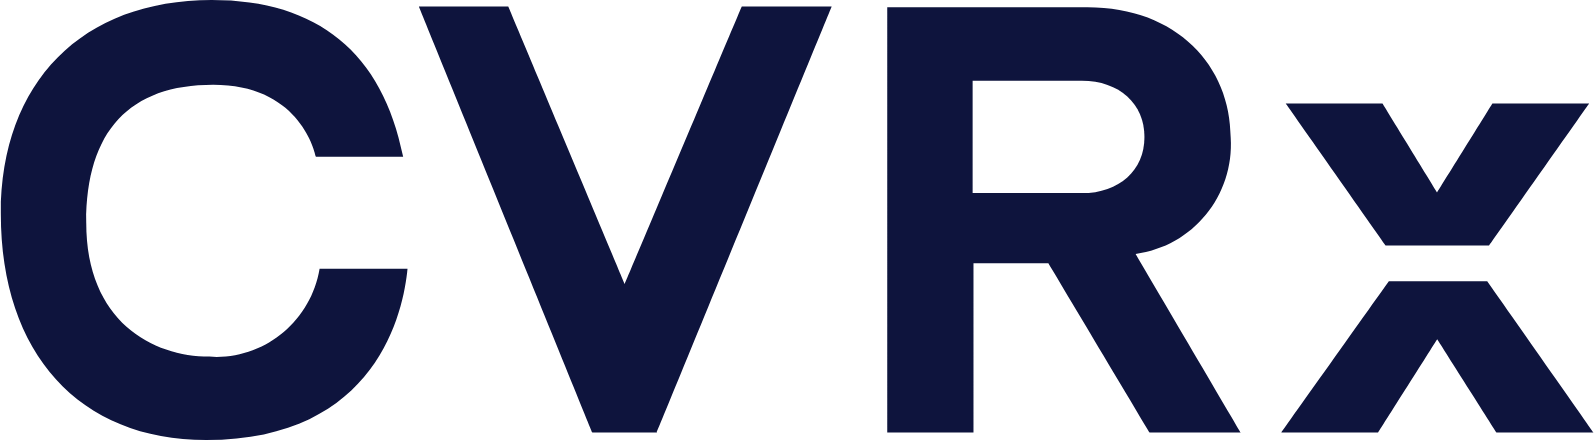 CVRx logo (PNG transparent)